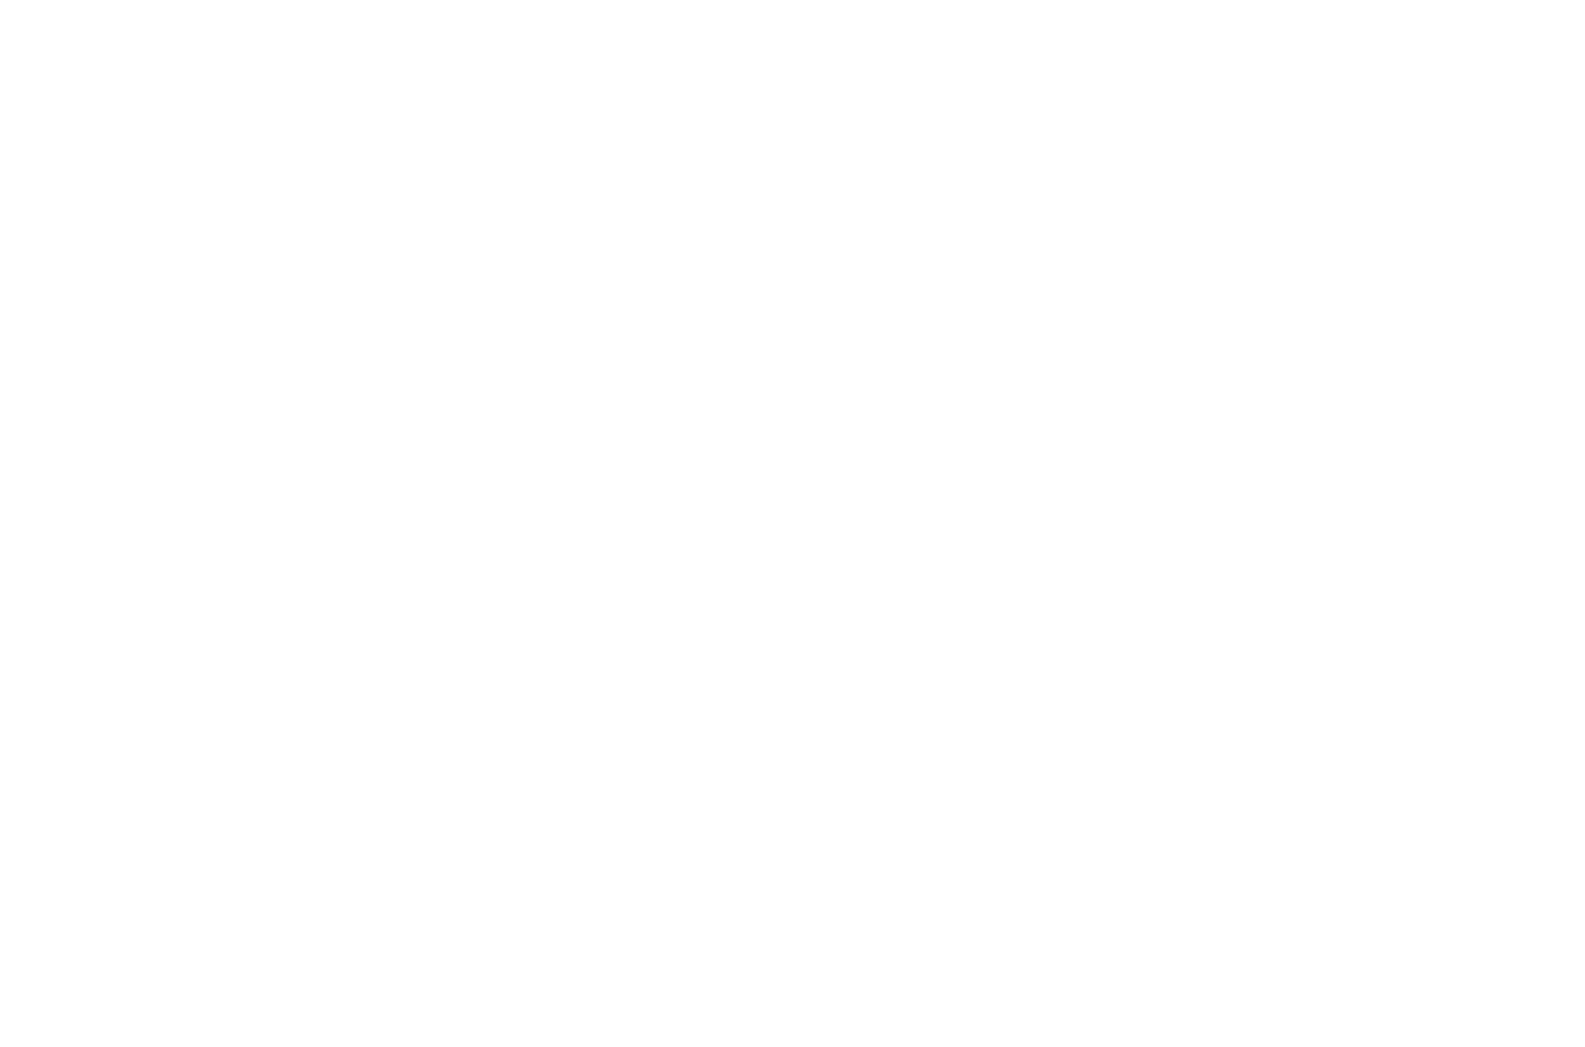 Huhtamäki logo pour fonds sombres (PNG transparent)